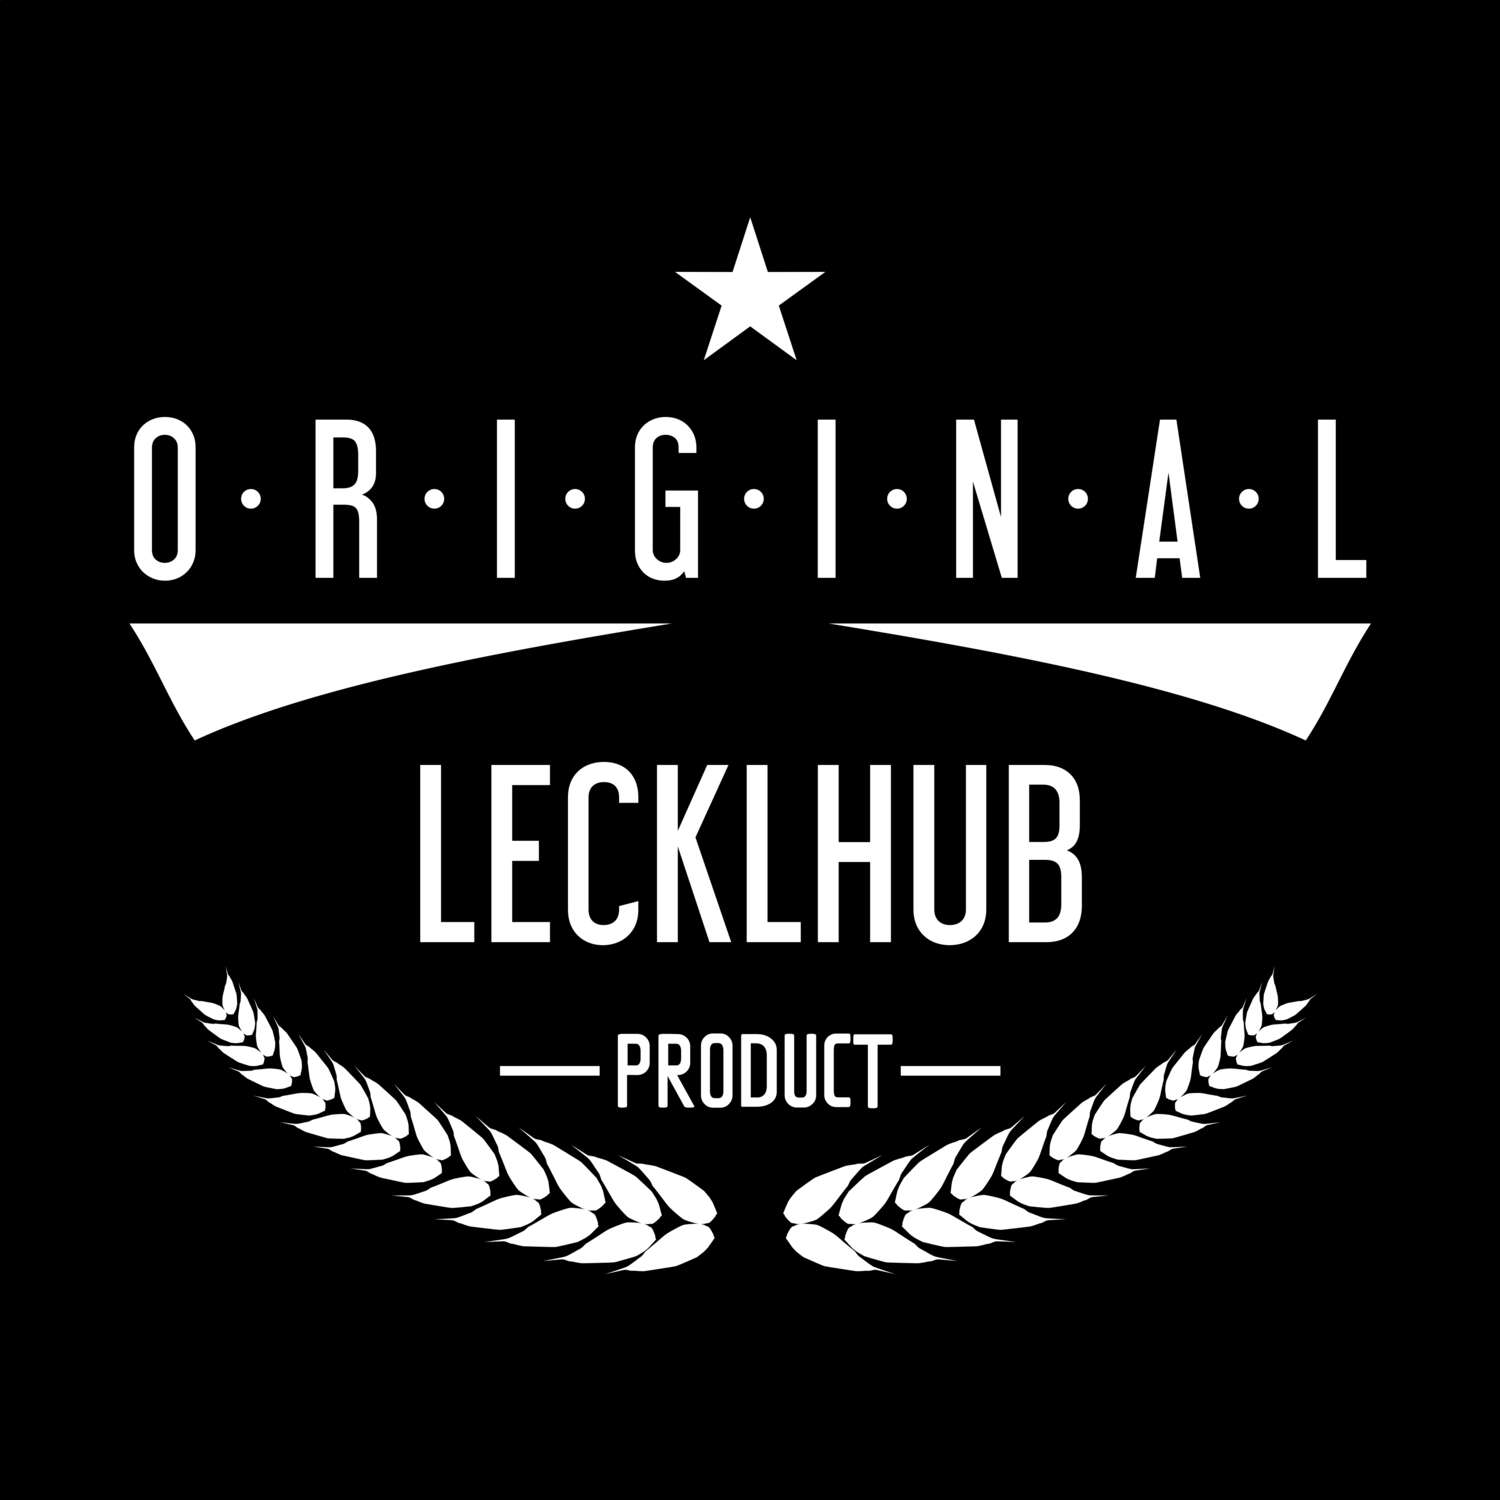 Lecklhub T-Shirt »Original Product«